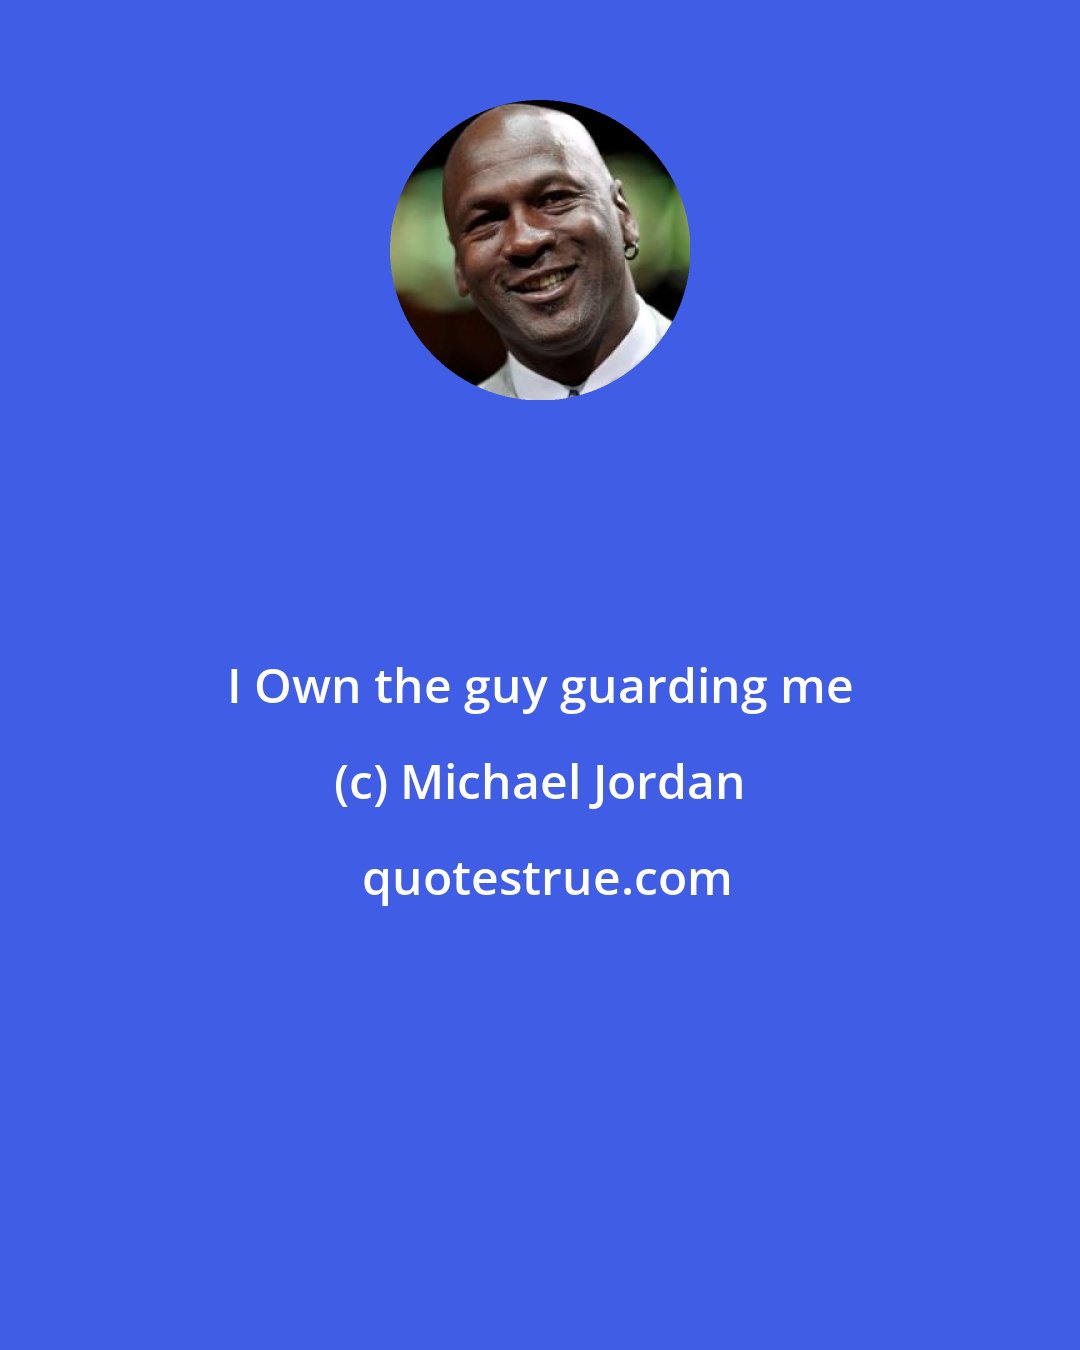 Michael Jordan: I Own the guy guarding me